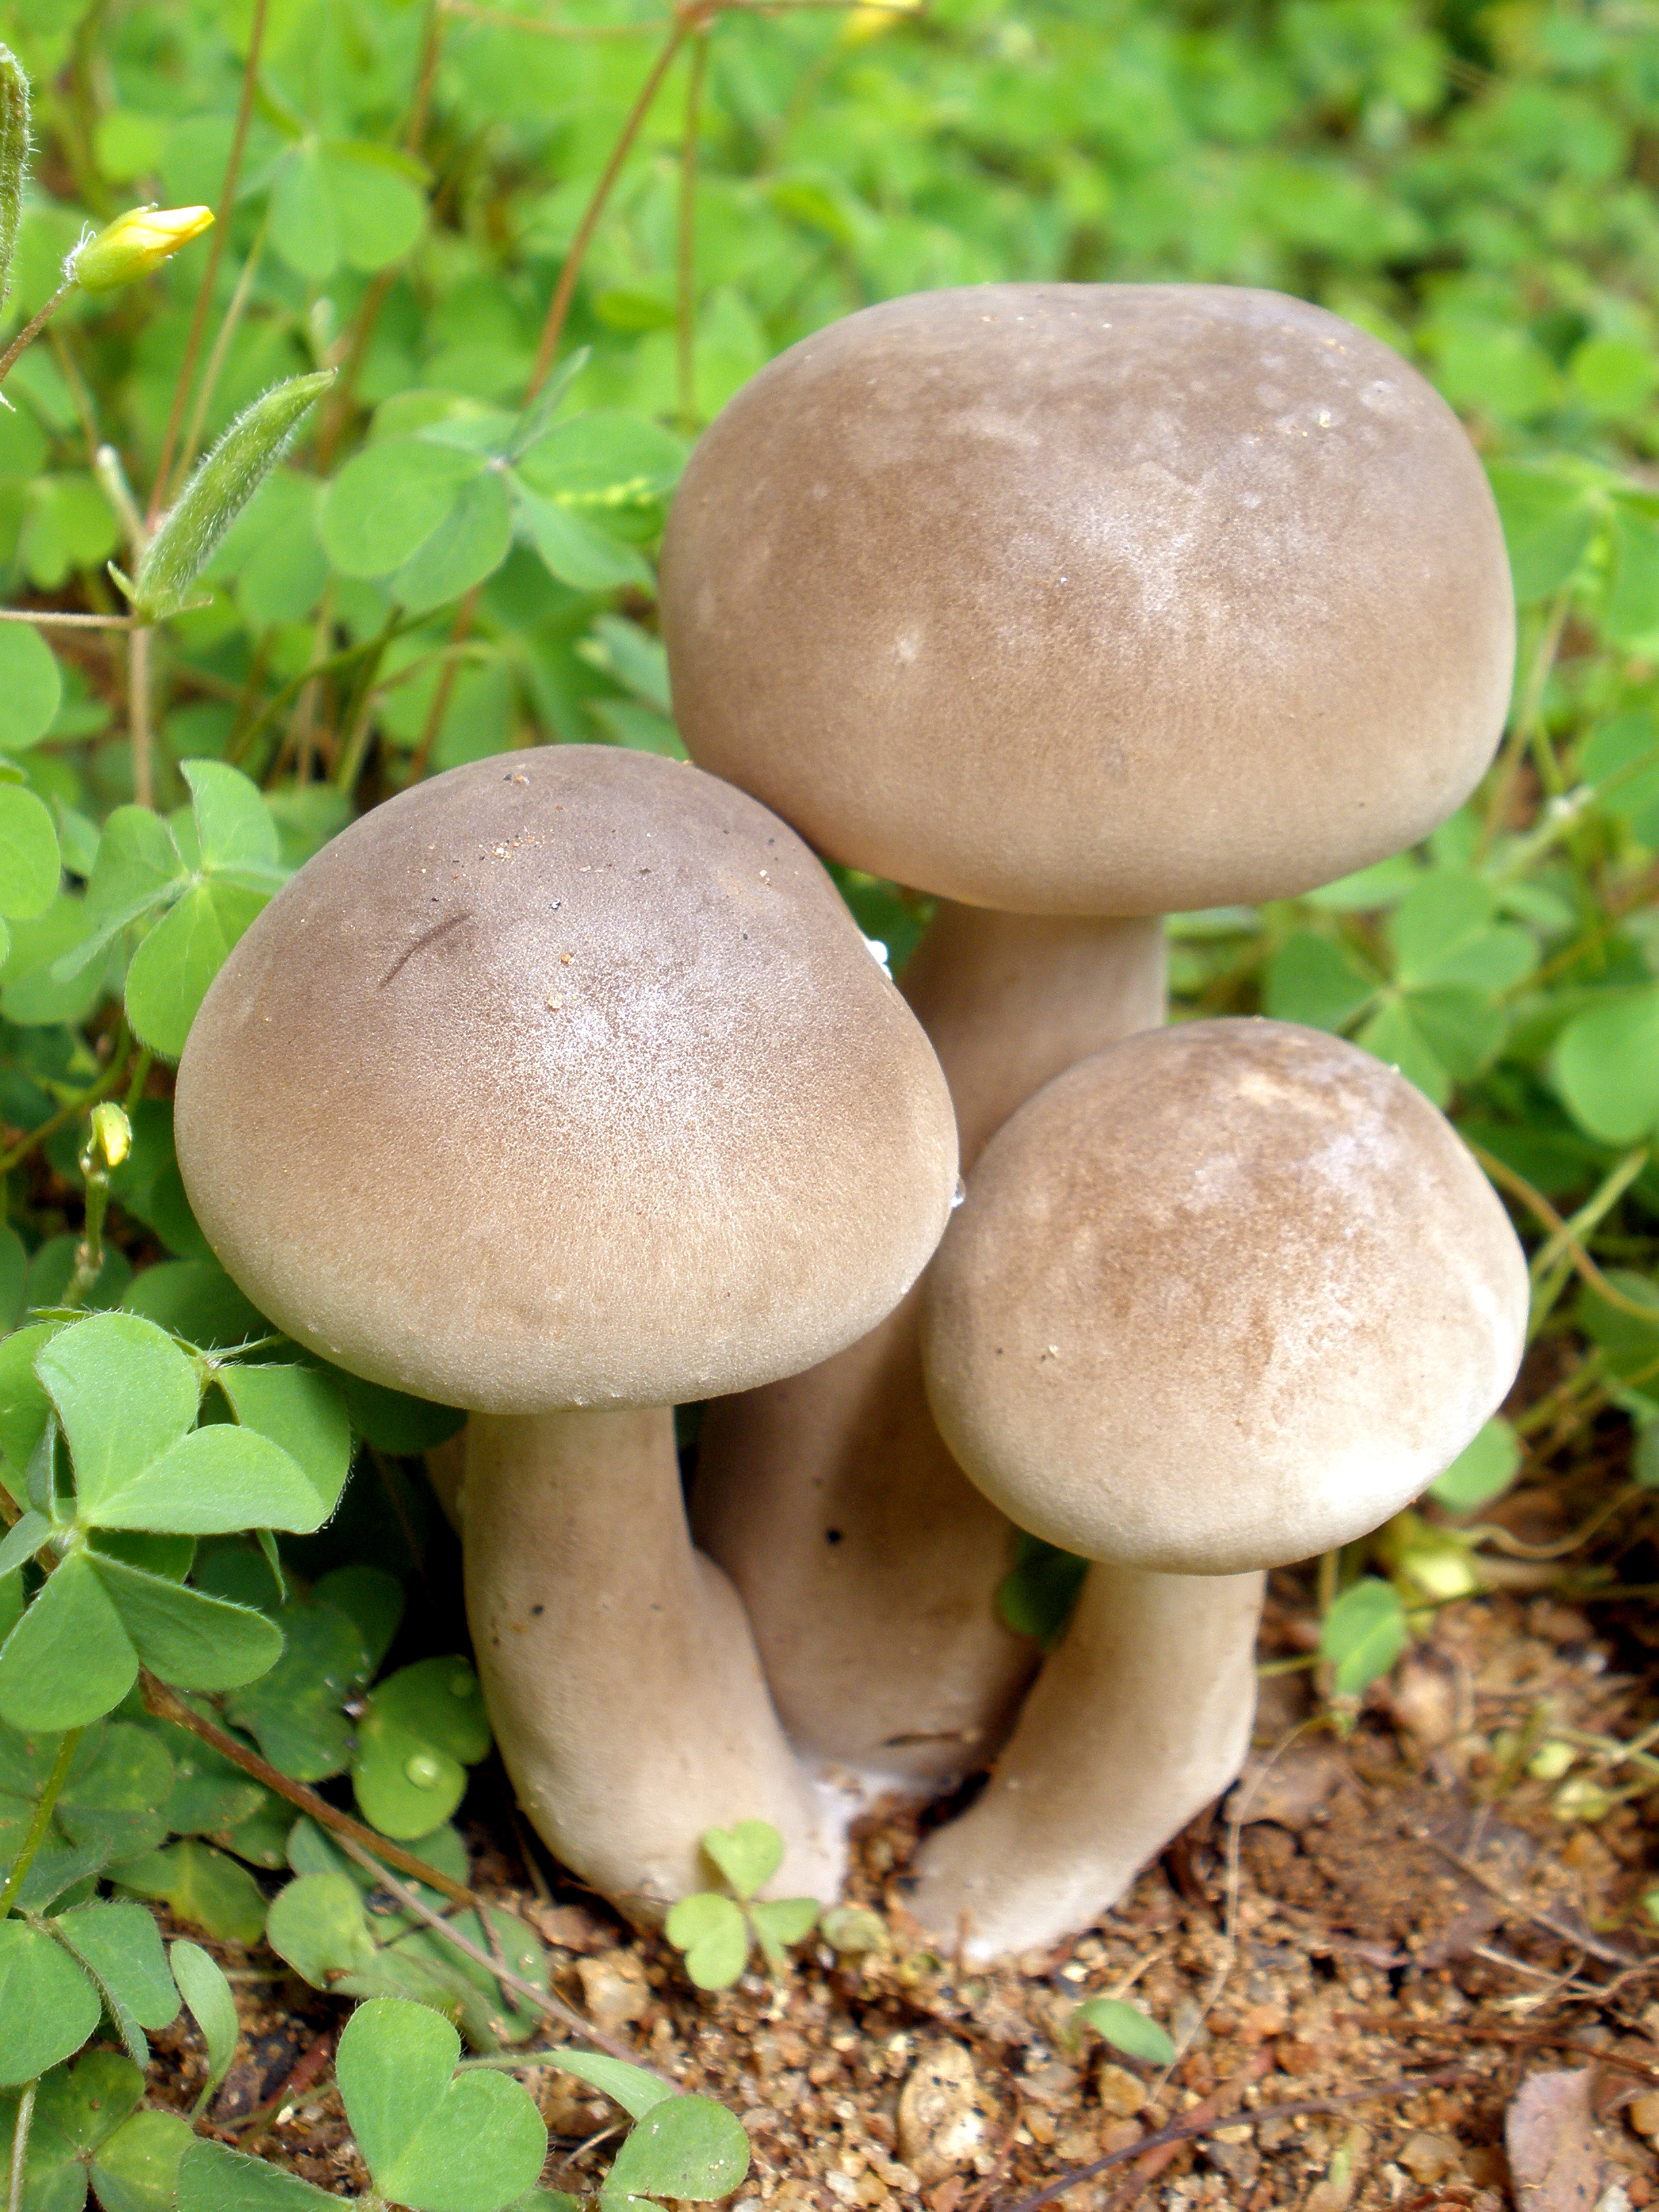 File:Mushroom - unidentified.jpg - Wikipedia